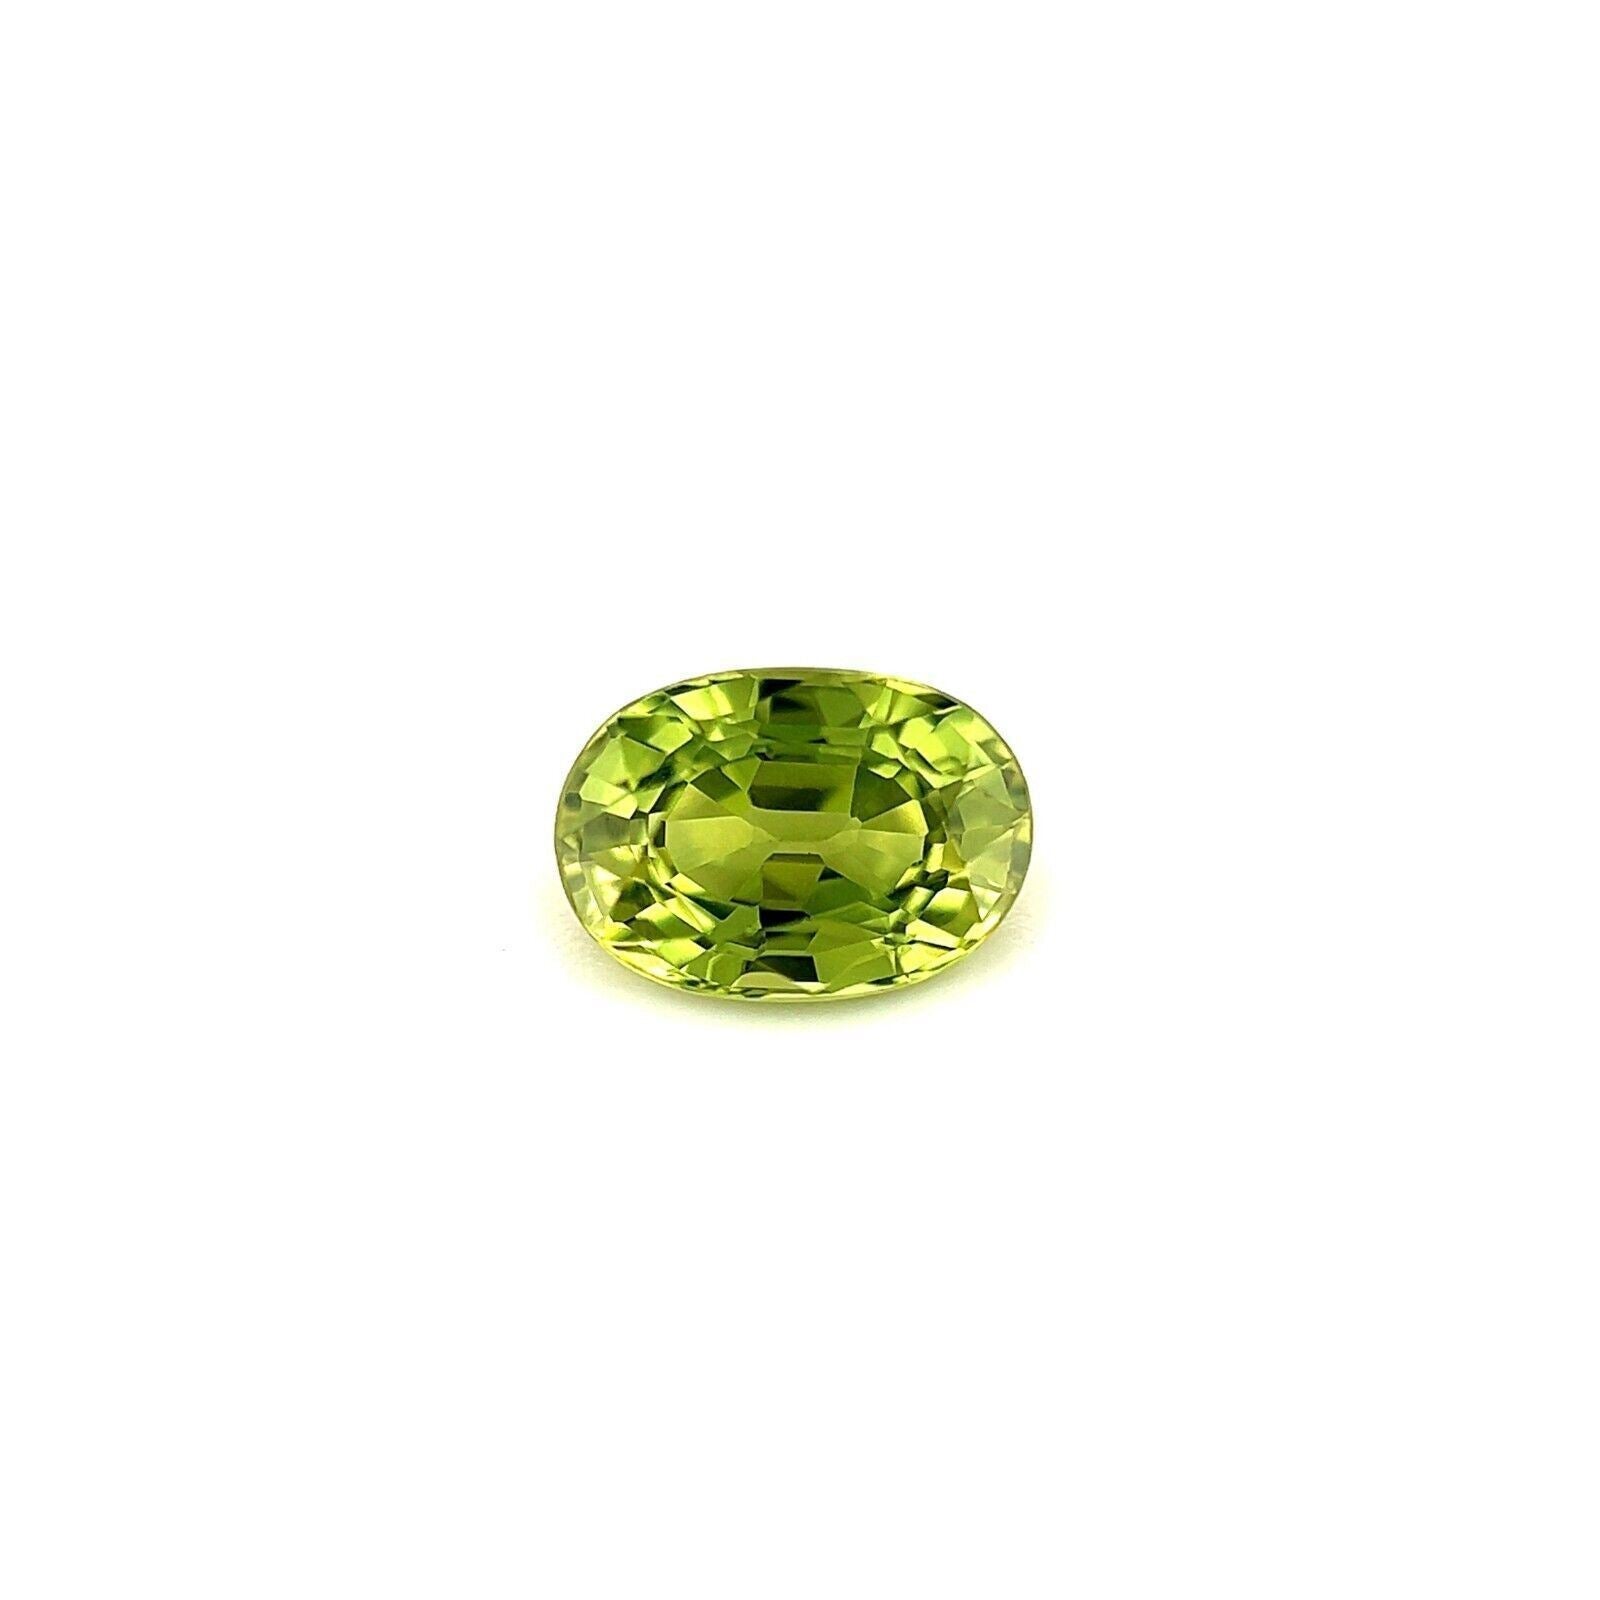 Vivid Lime Green Australia Sapphire 0.70ct Oval Cut Loose Gem 6x4.3mm